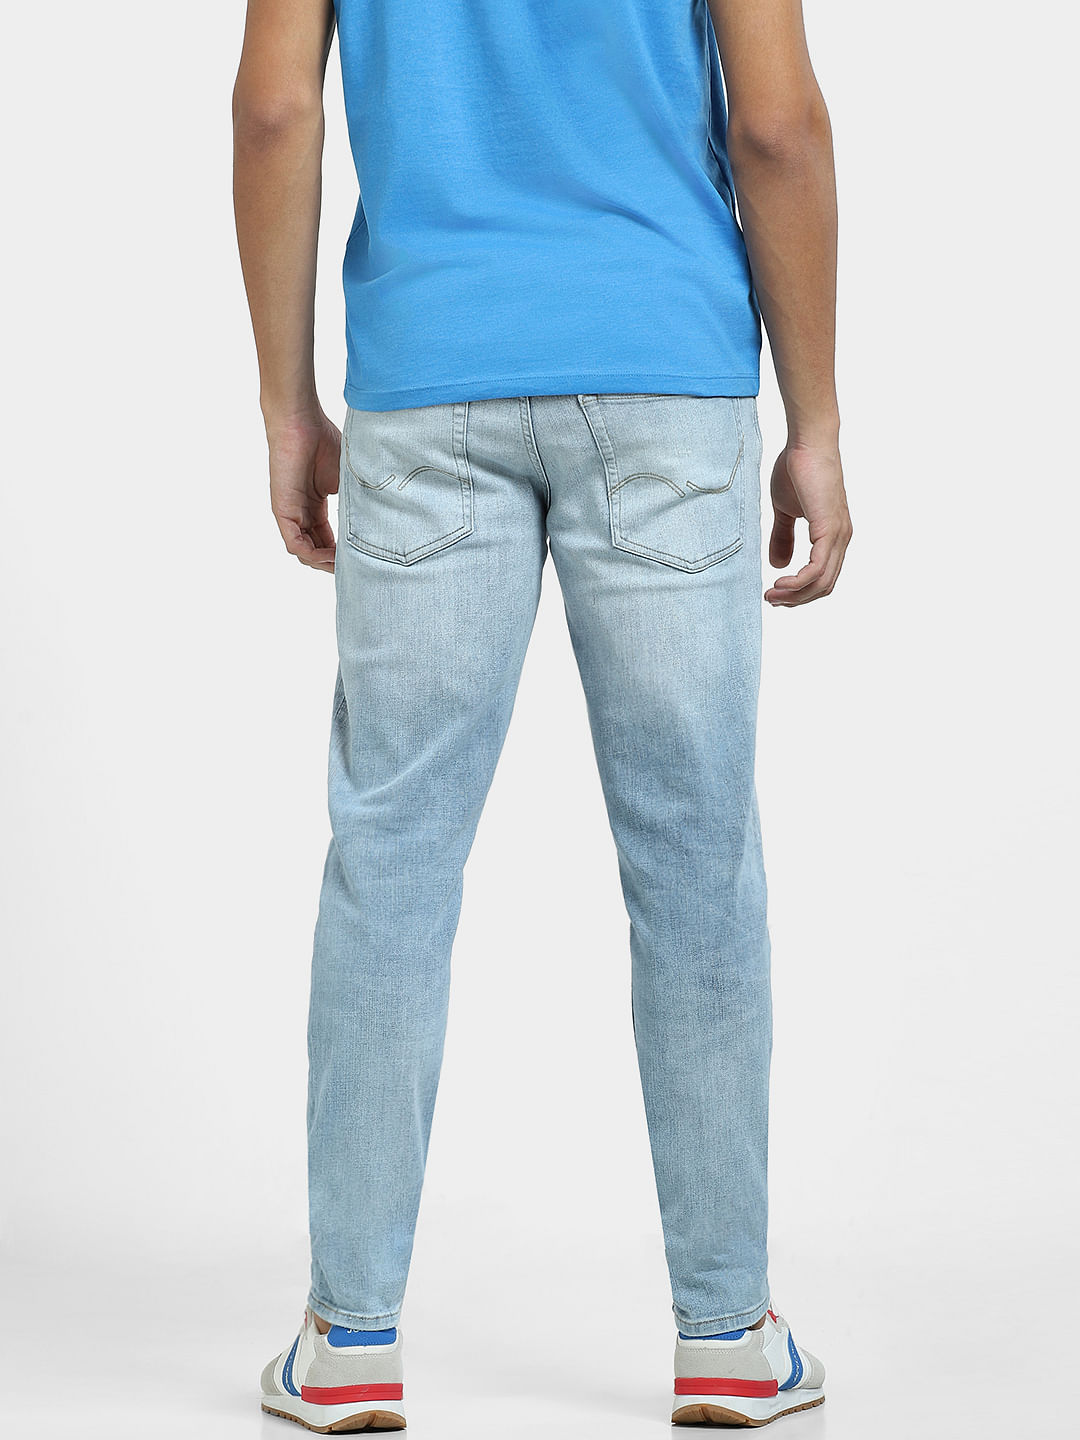 Buy BLUE BUDDHA Men's Grey Denim Slim Fit Jeans-230410334 at Amazon.in